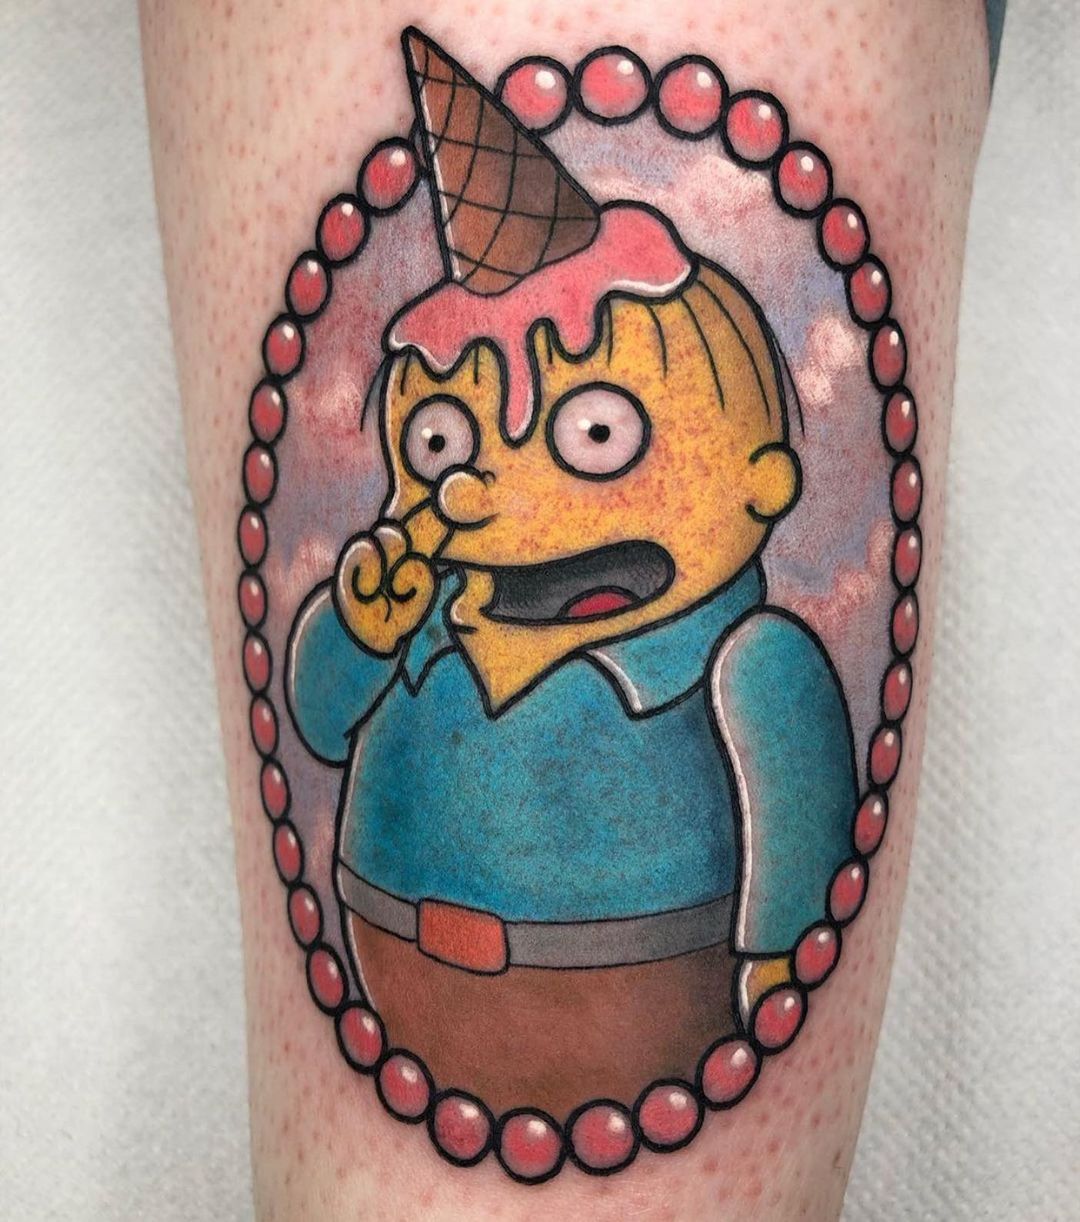 Ralph the unicorn tattoo based on The Simpsons